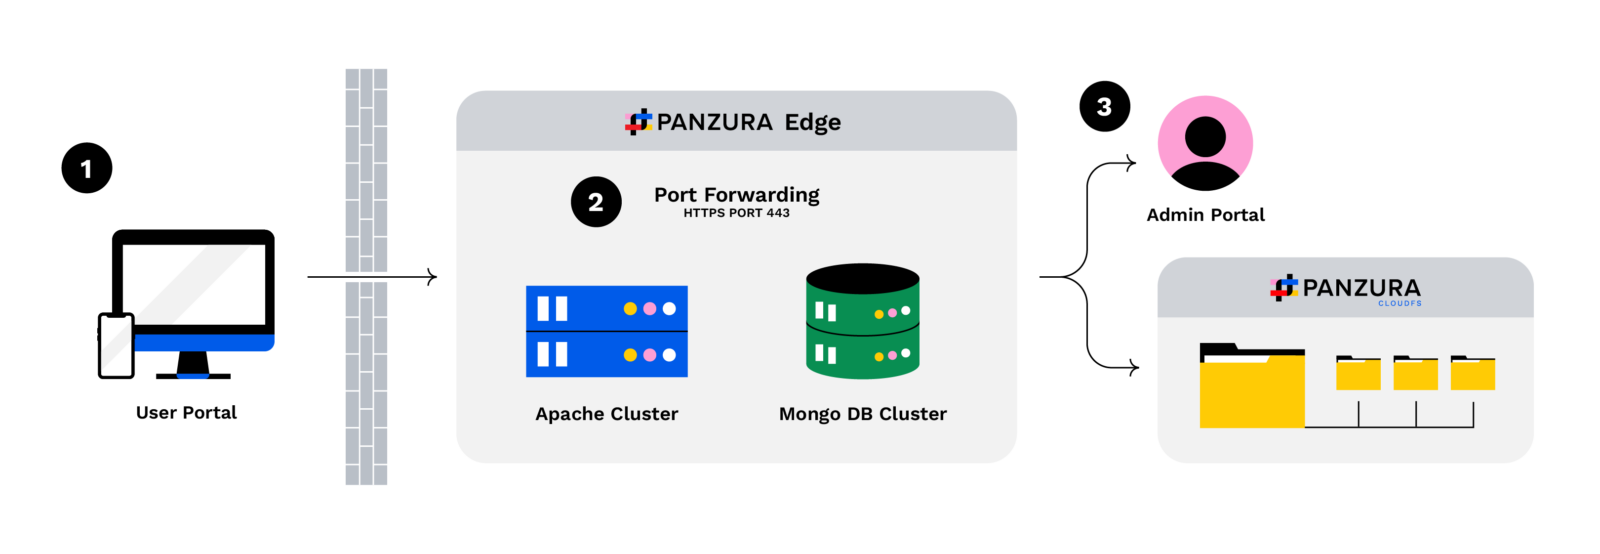 Panzura-Edge-architecture-diagram-horizontal